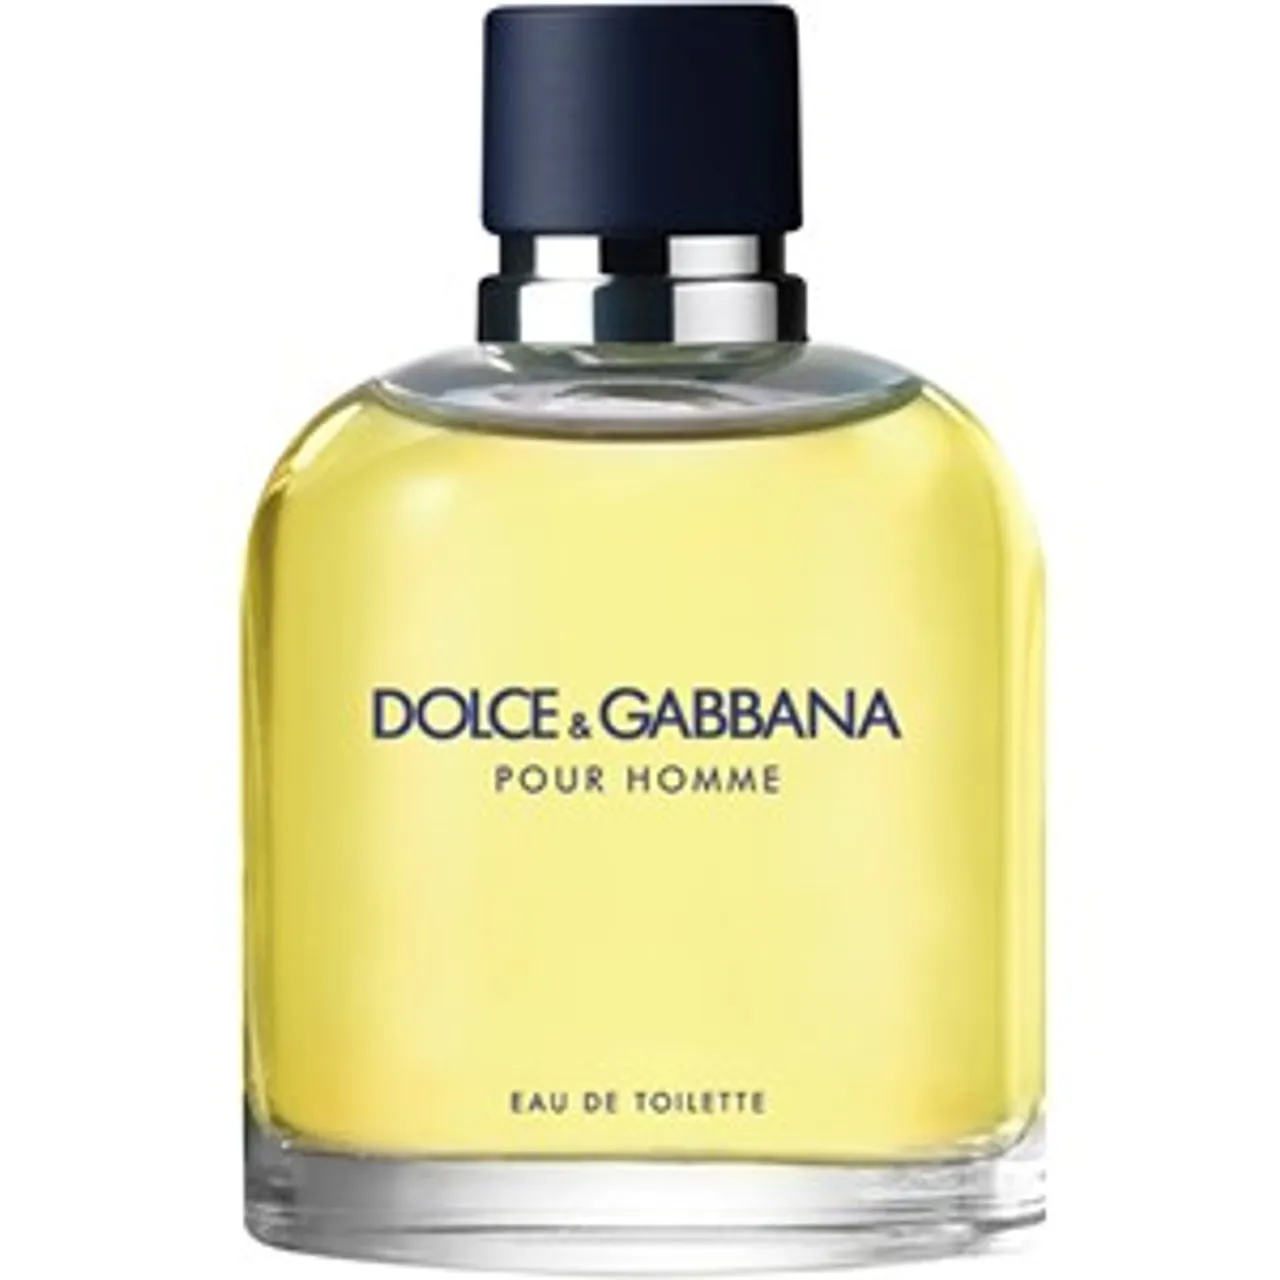 Dolce&Gabbana Eau de Toilette Spray 1 75 ml